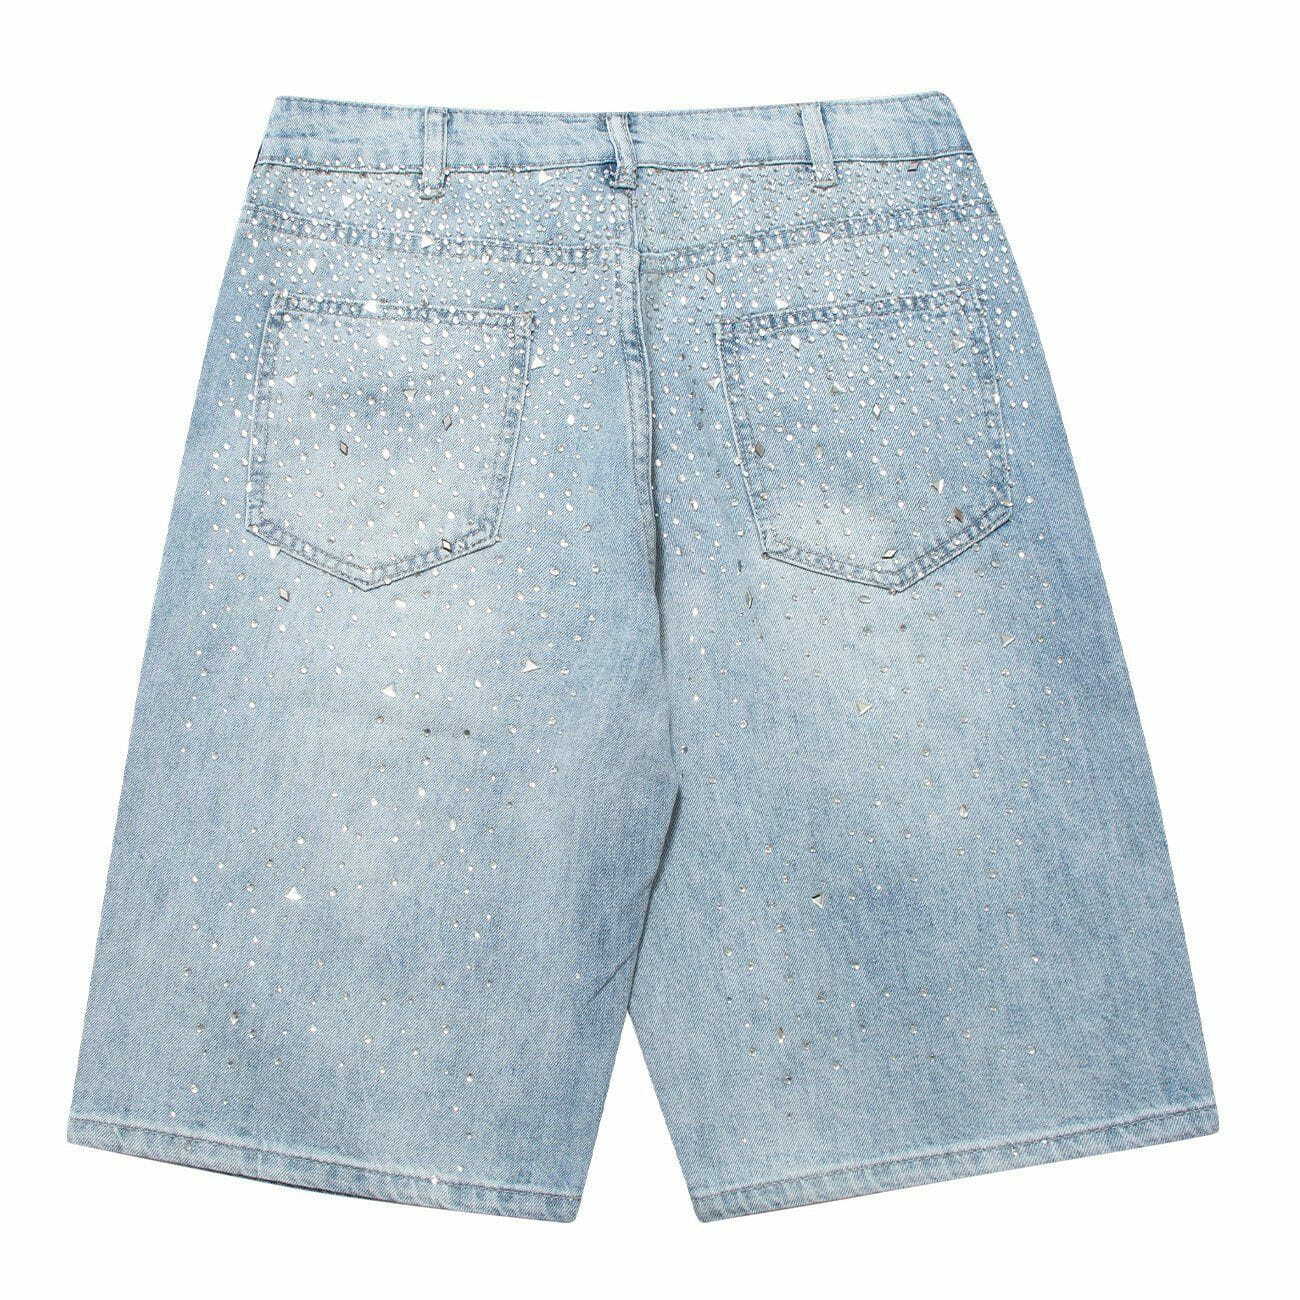 denim diamond shorts vintage sparkle & streetwear chic 8111